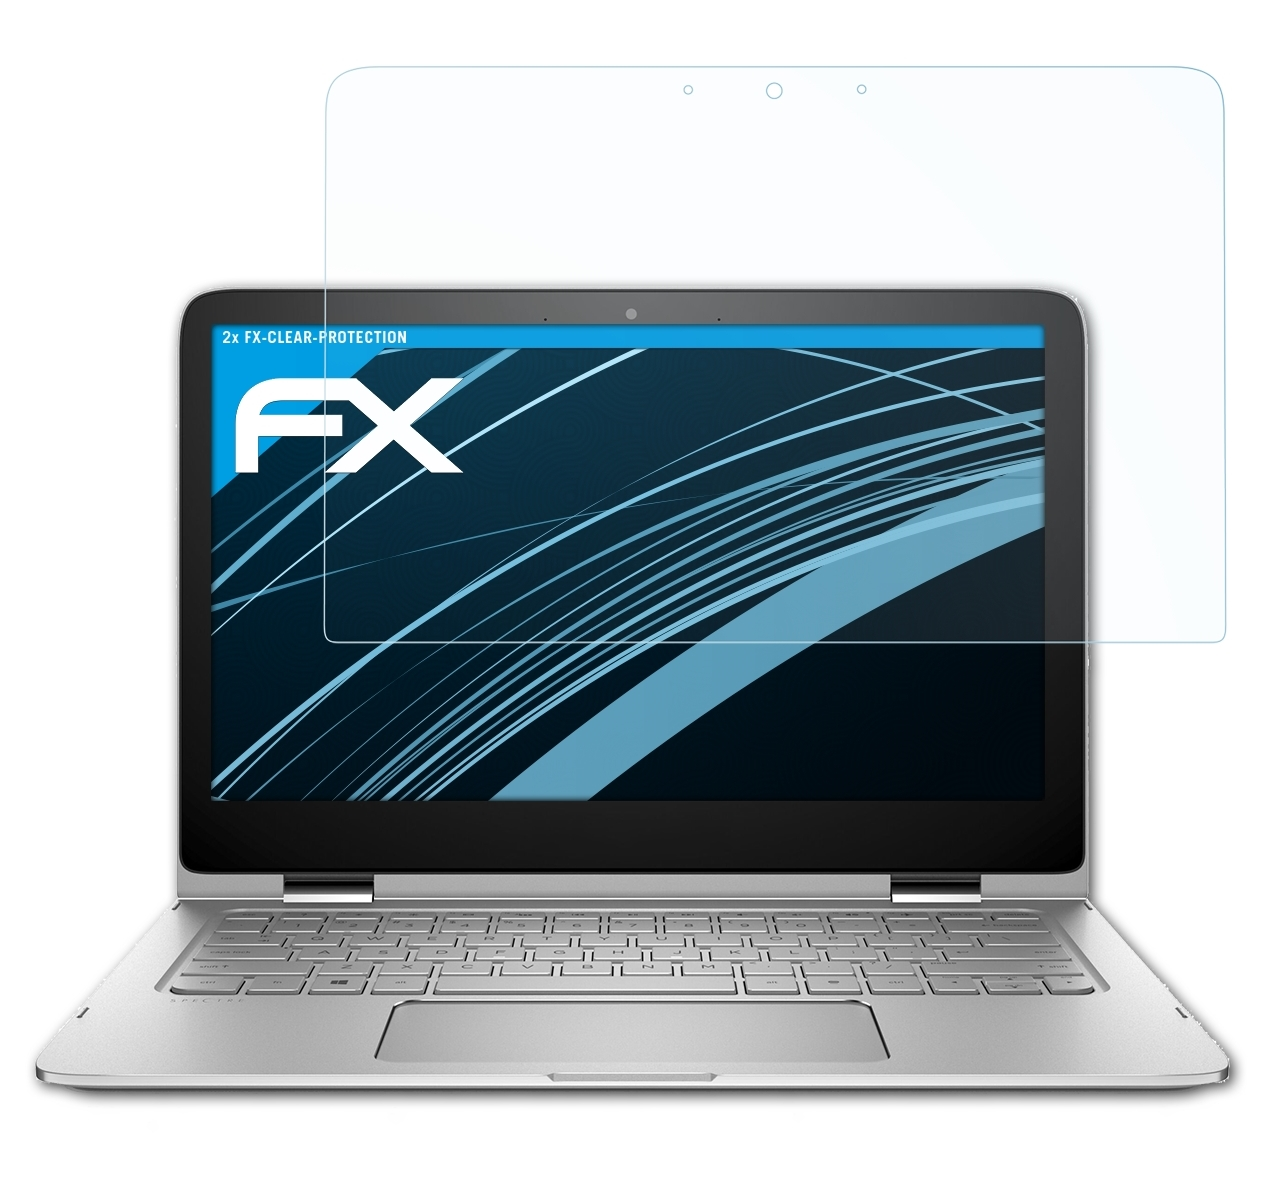 HP 13-4157ng) 2x ATFOLIX Displayschutz(für FX-Clear Spectre x360